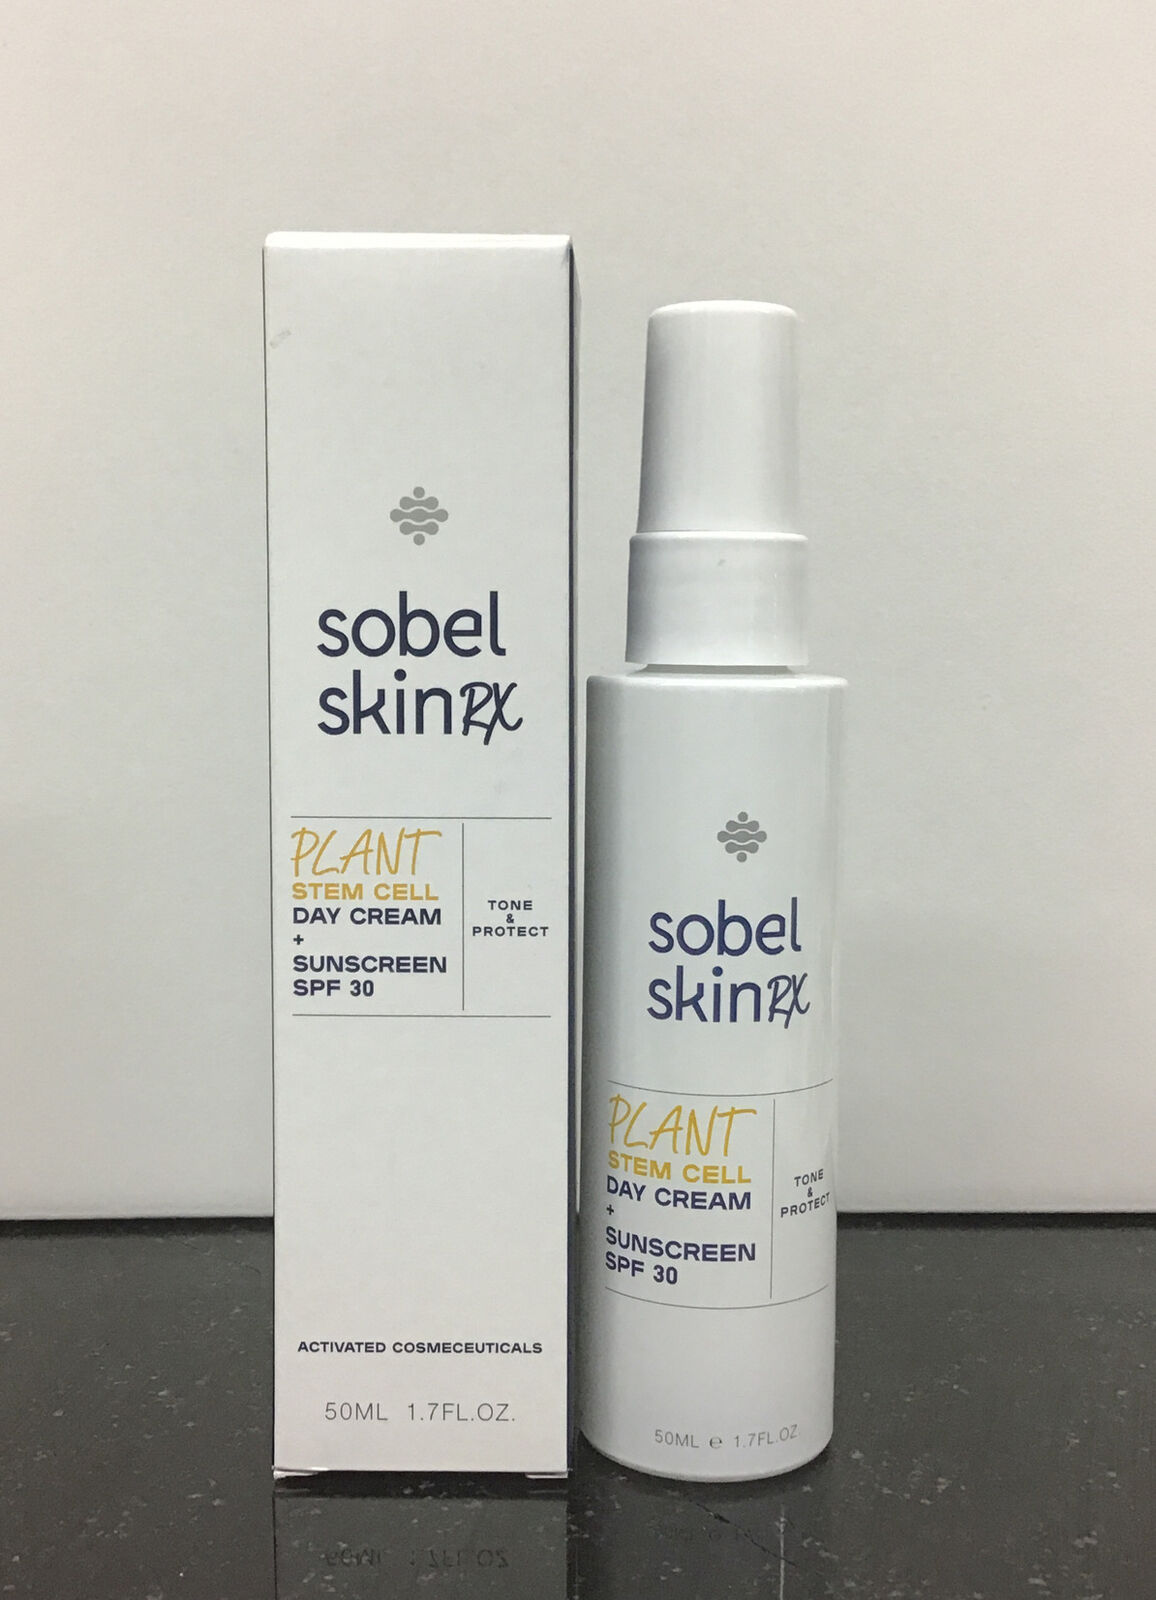 Sobel Skin plant stem cell Day cream + Sunscreen SPF 30, 1.7 fl oz As pictured.